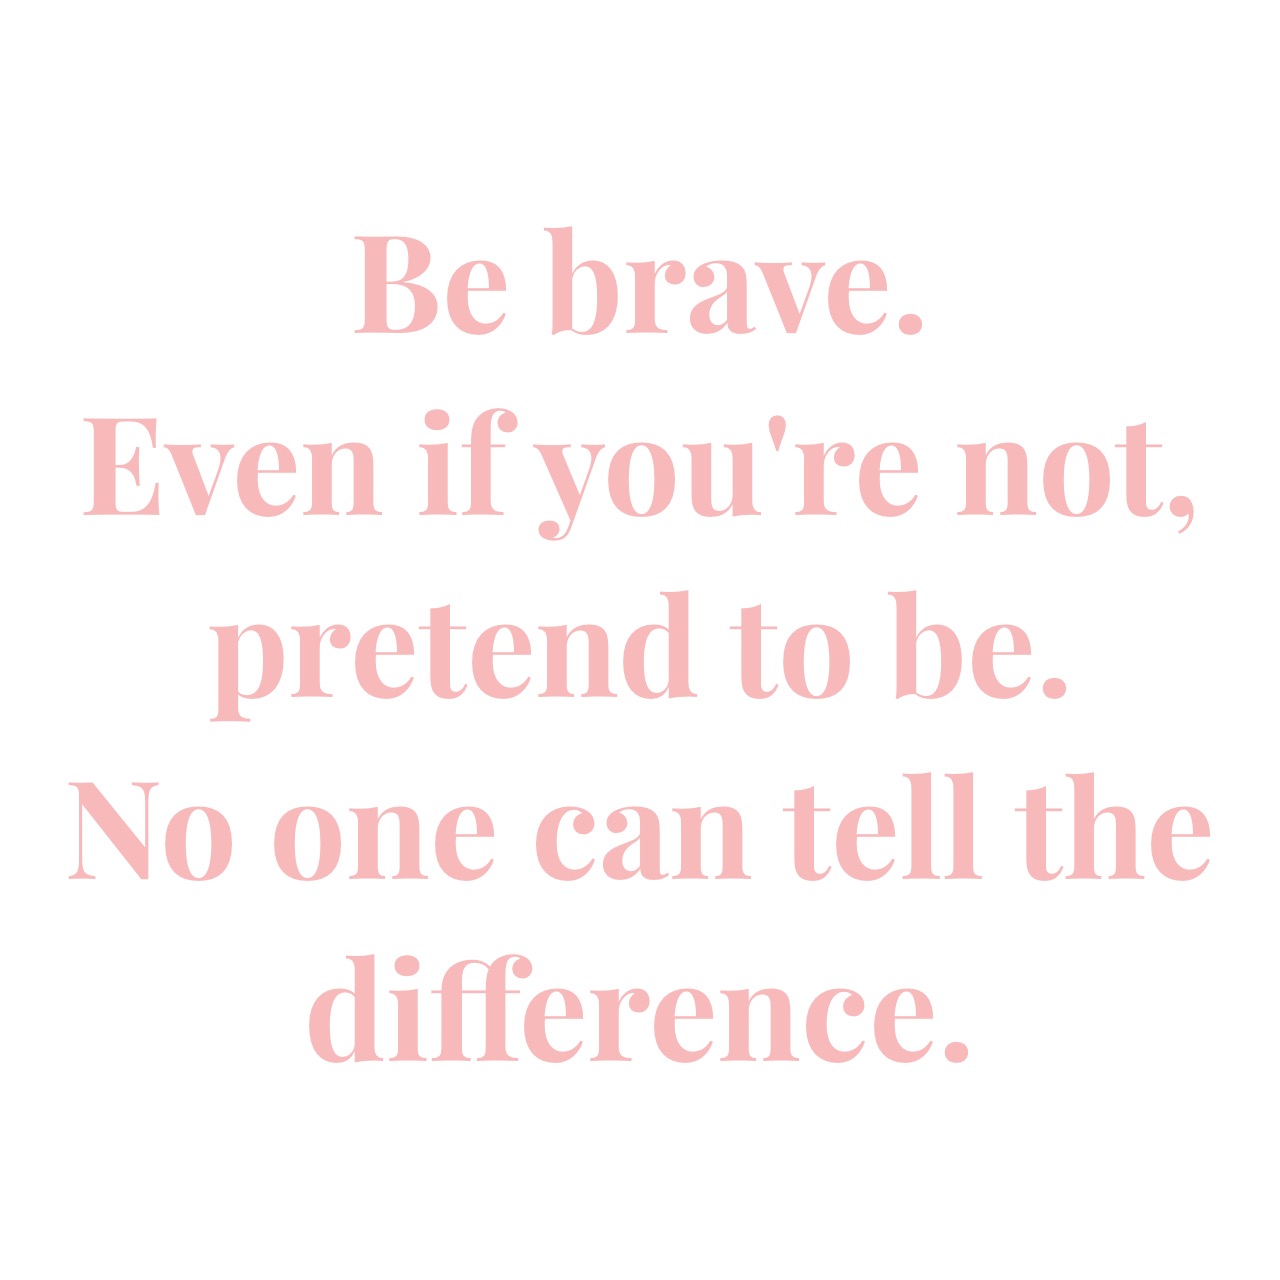 Be brave.